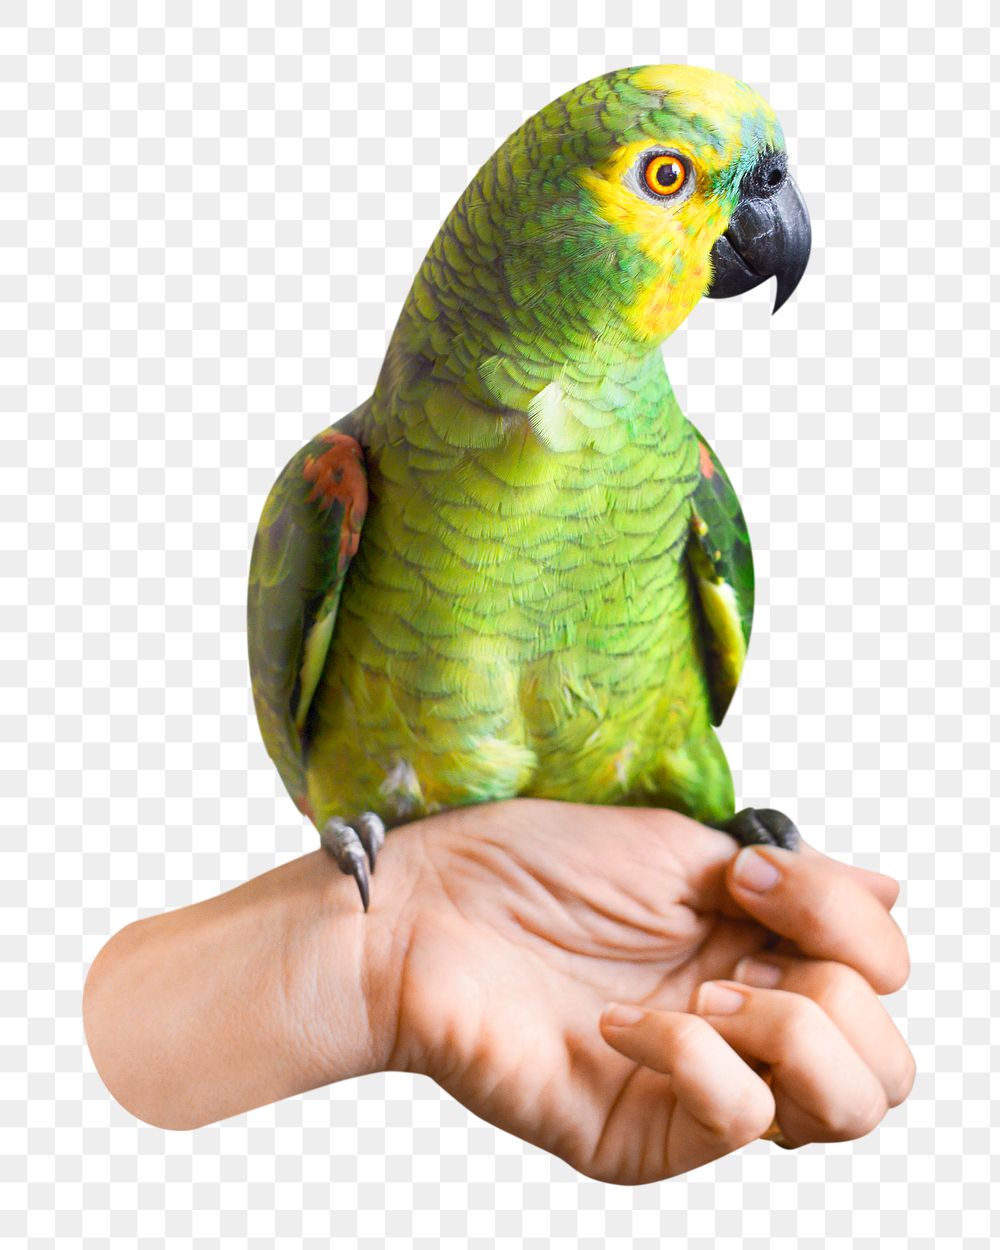 Green parrot png sticker, transparent background 